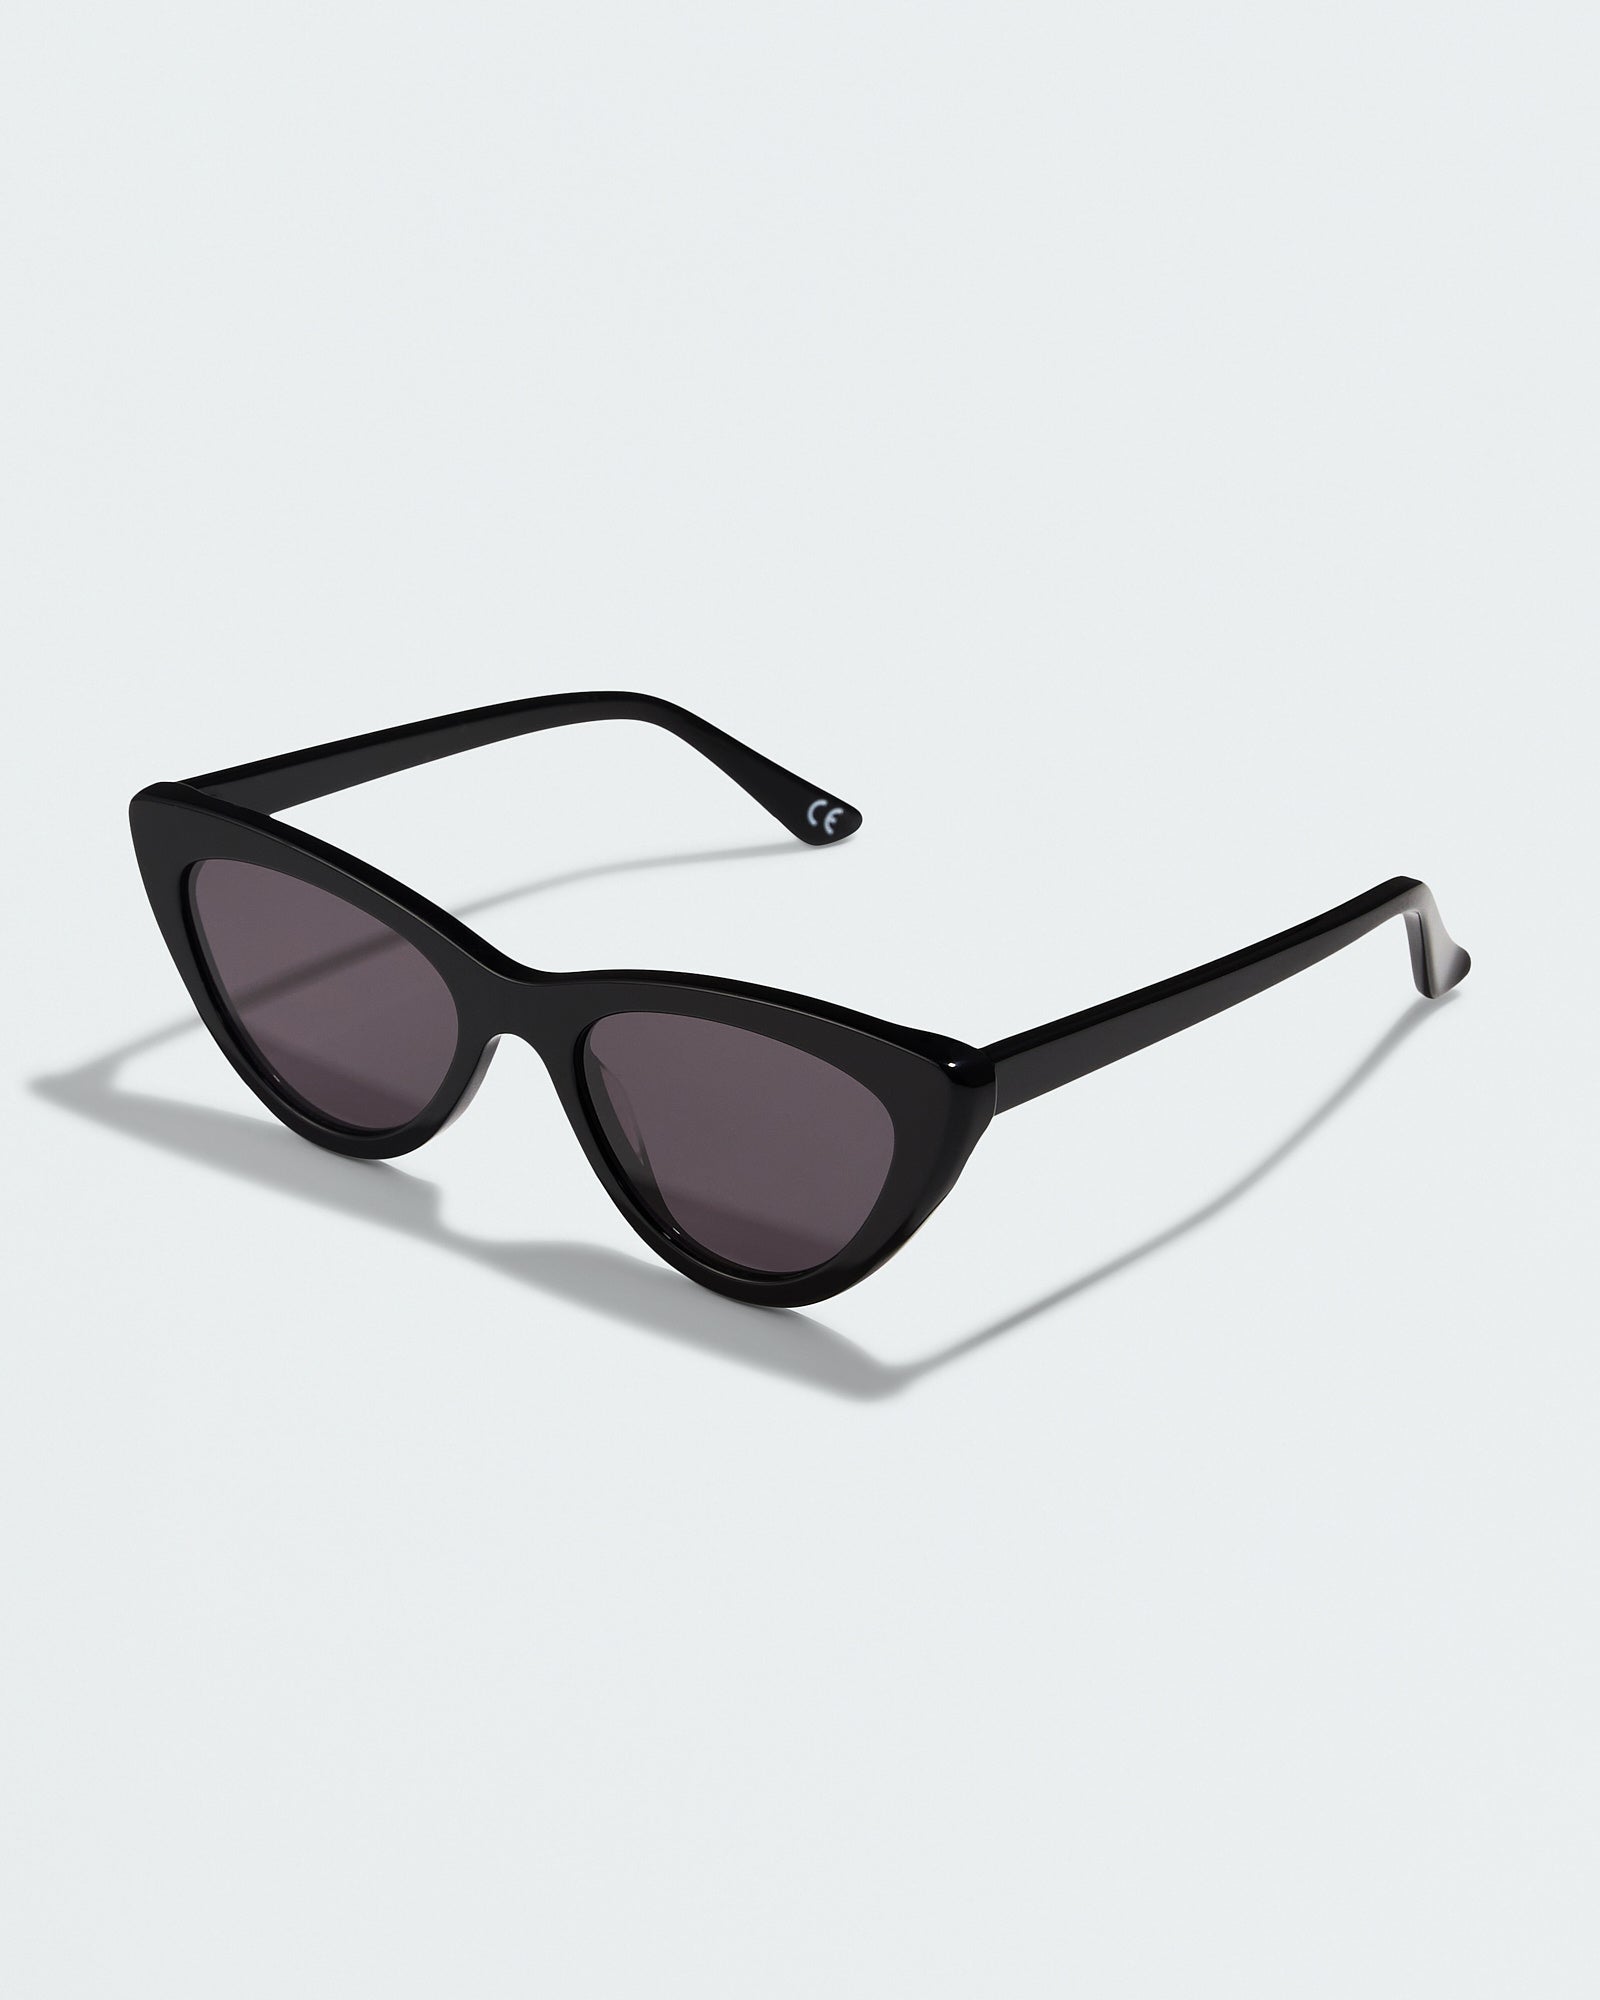 The Leui, Jet Black - Classic Cat Eye Sunnies, Women's Sunglasses & Eyewear by Luv Lou